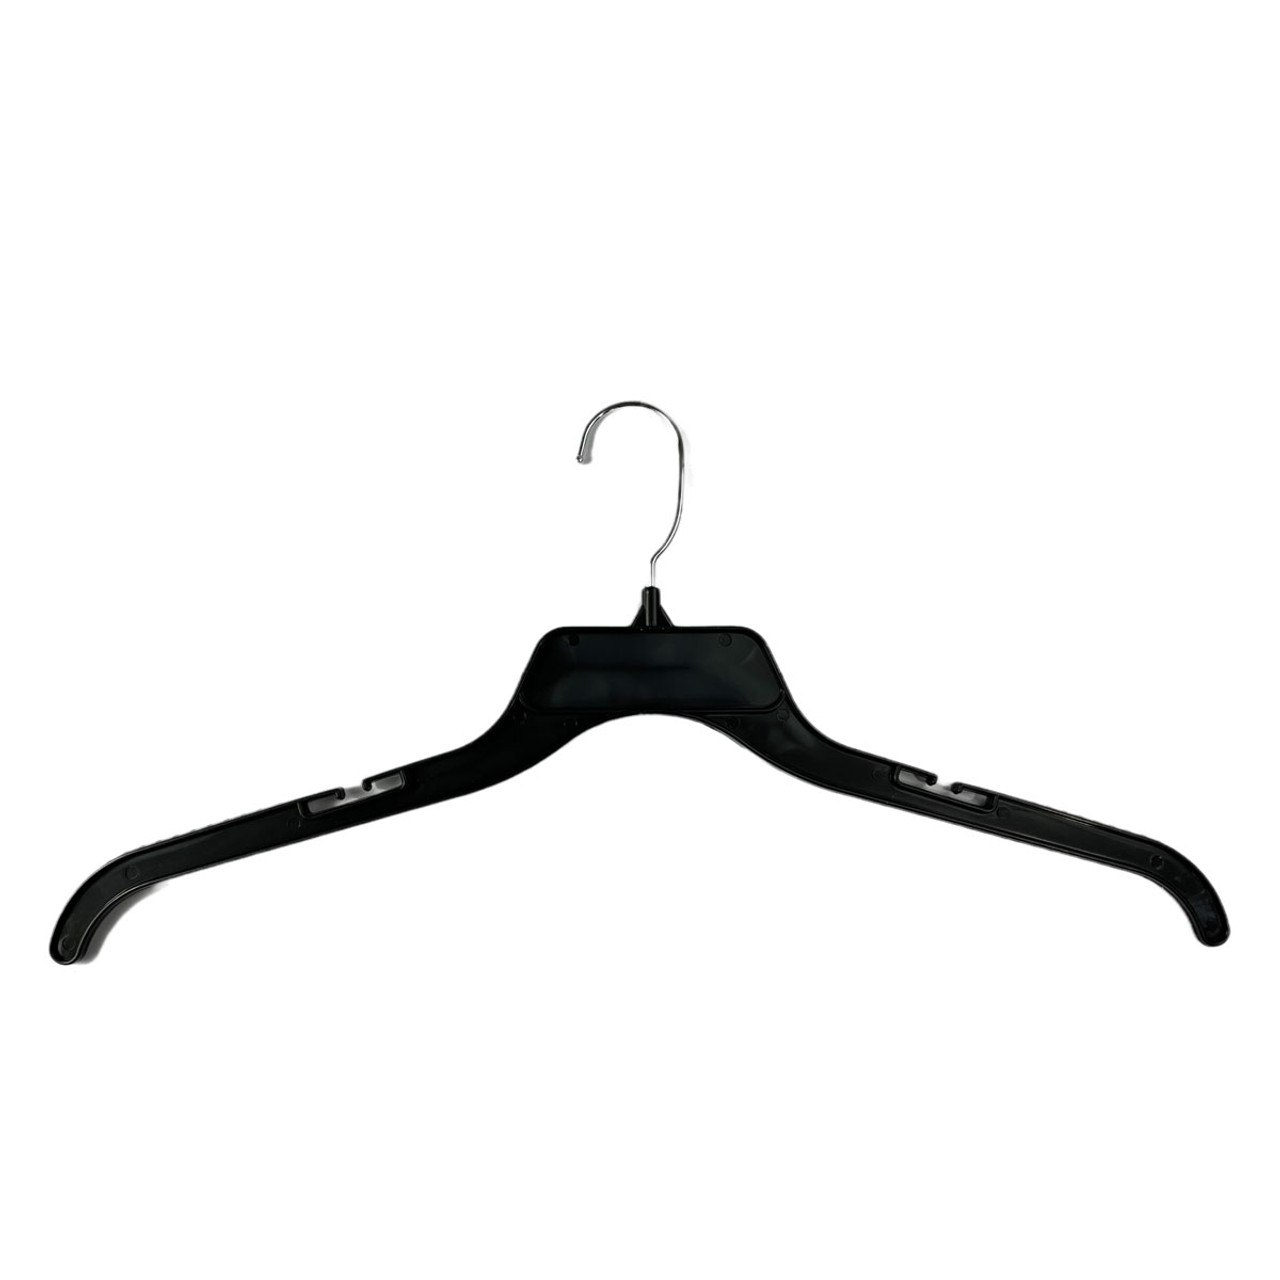 19 Heavy Weight Plastic Dress/Shirt Hanger Black/Black (Box of 100)